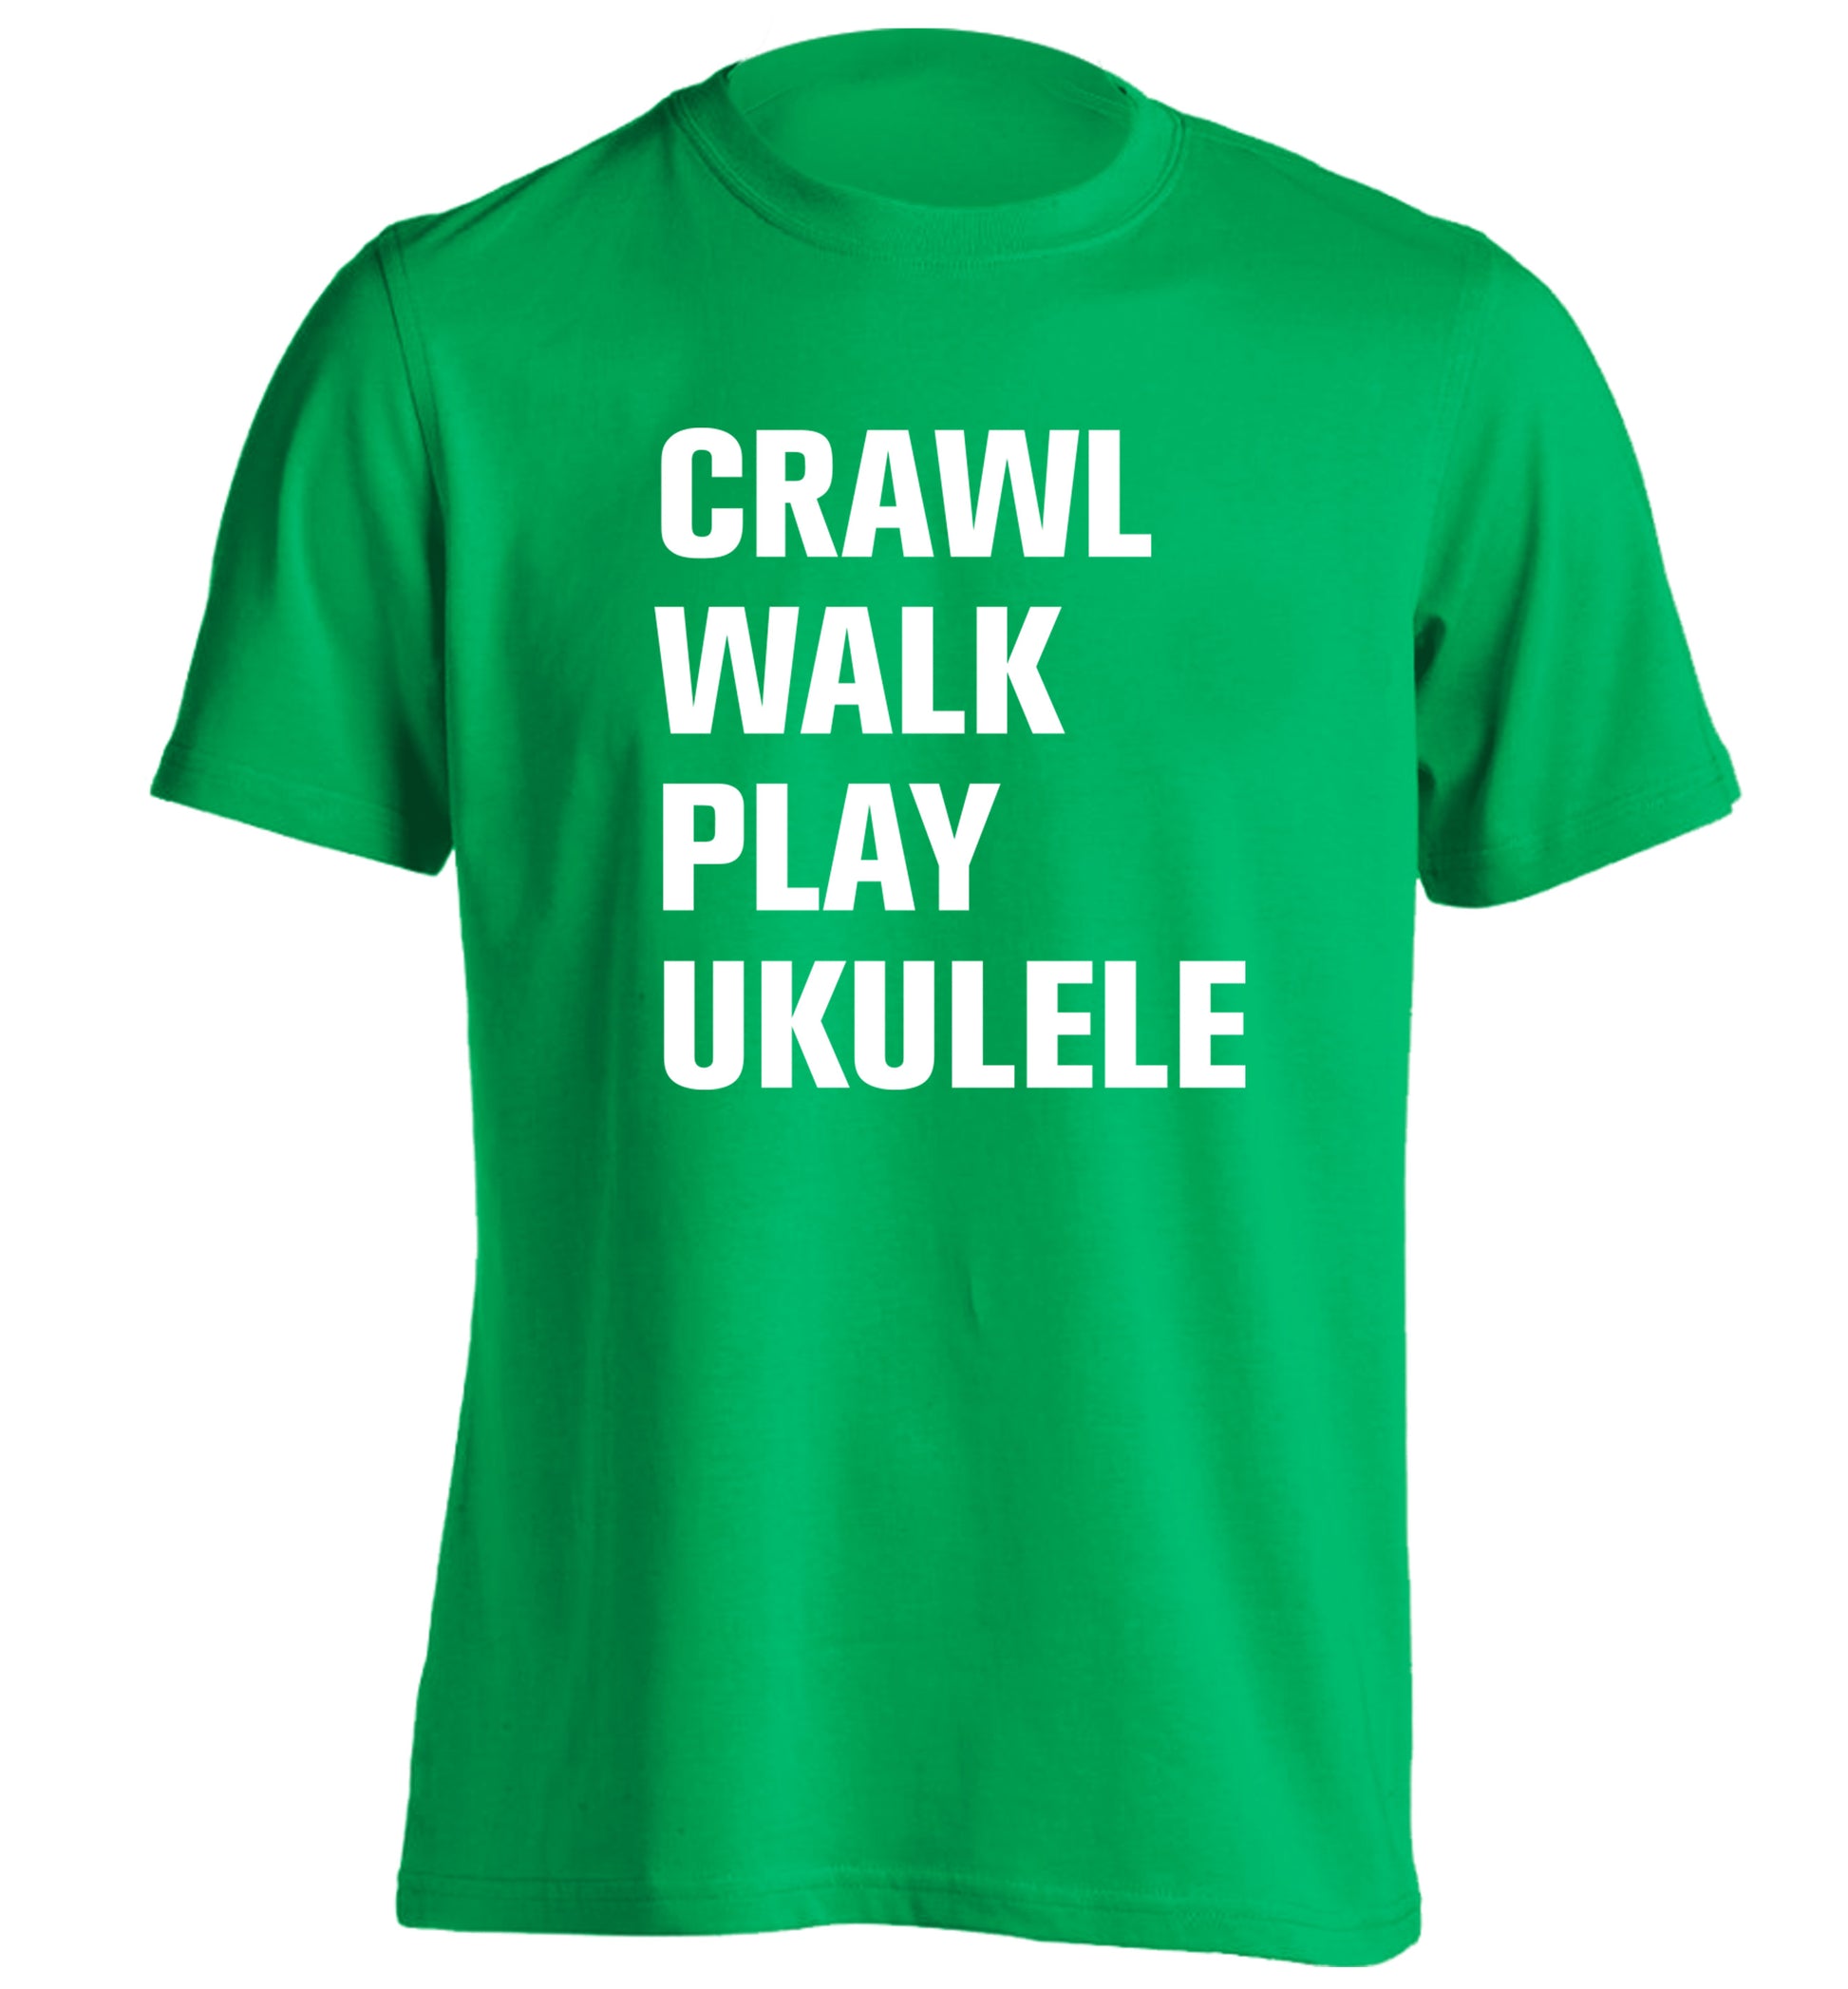 Crawl walk play ukulele adults unisex green Tshirt 2XL